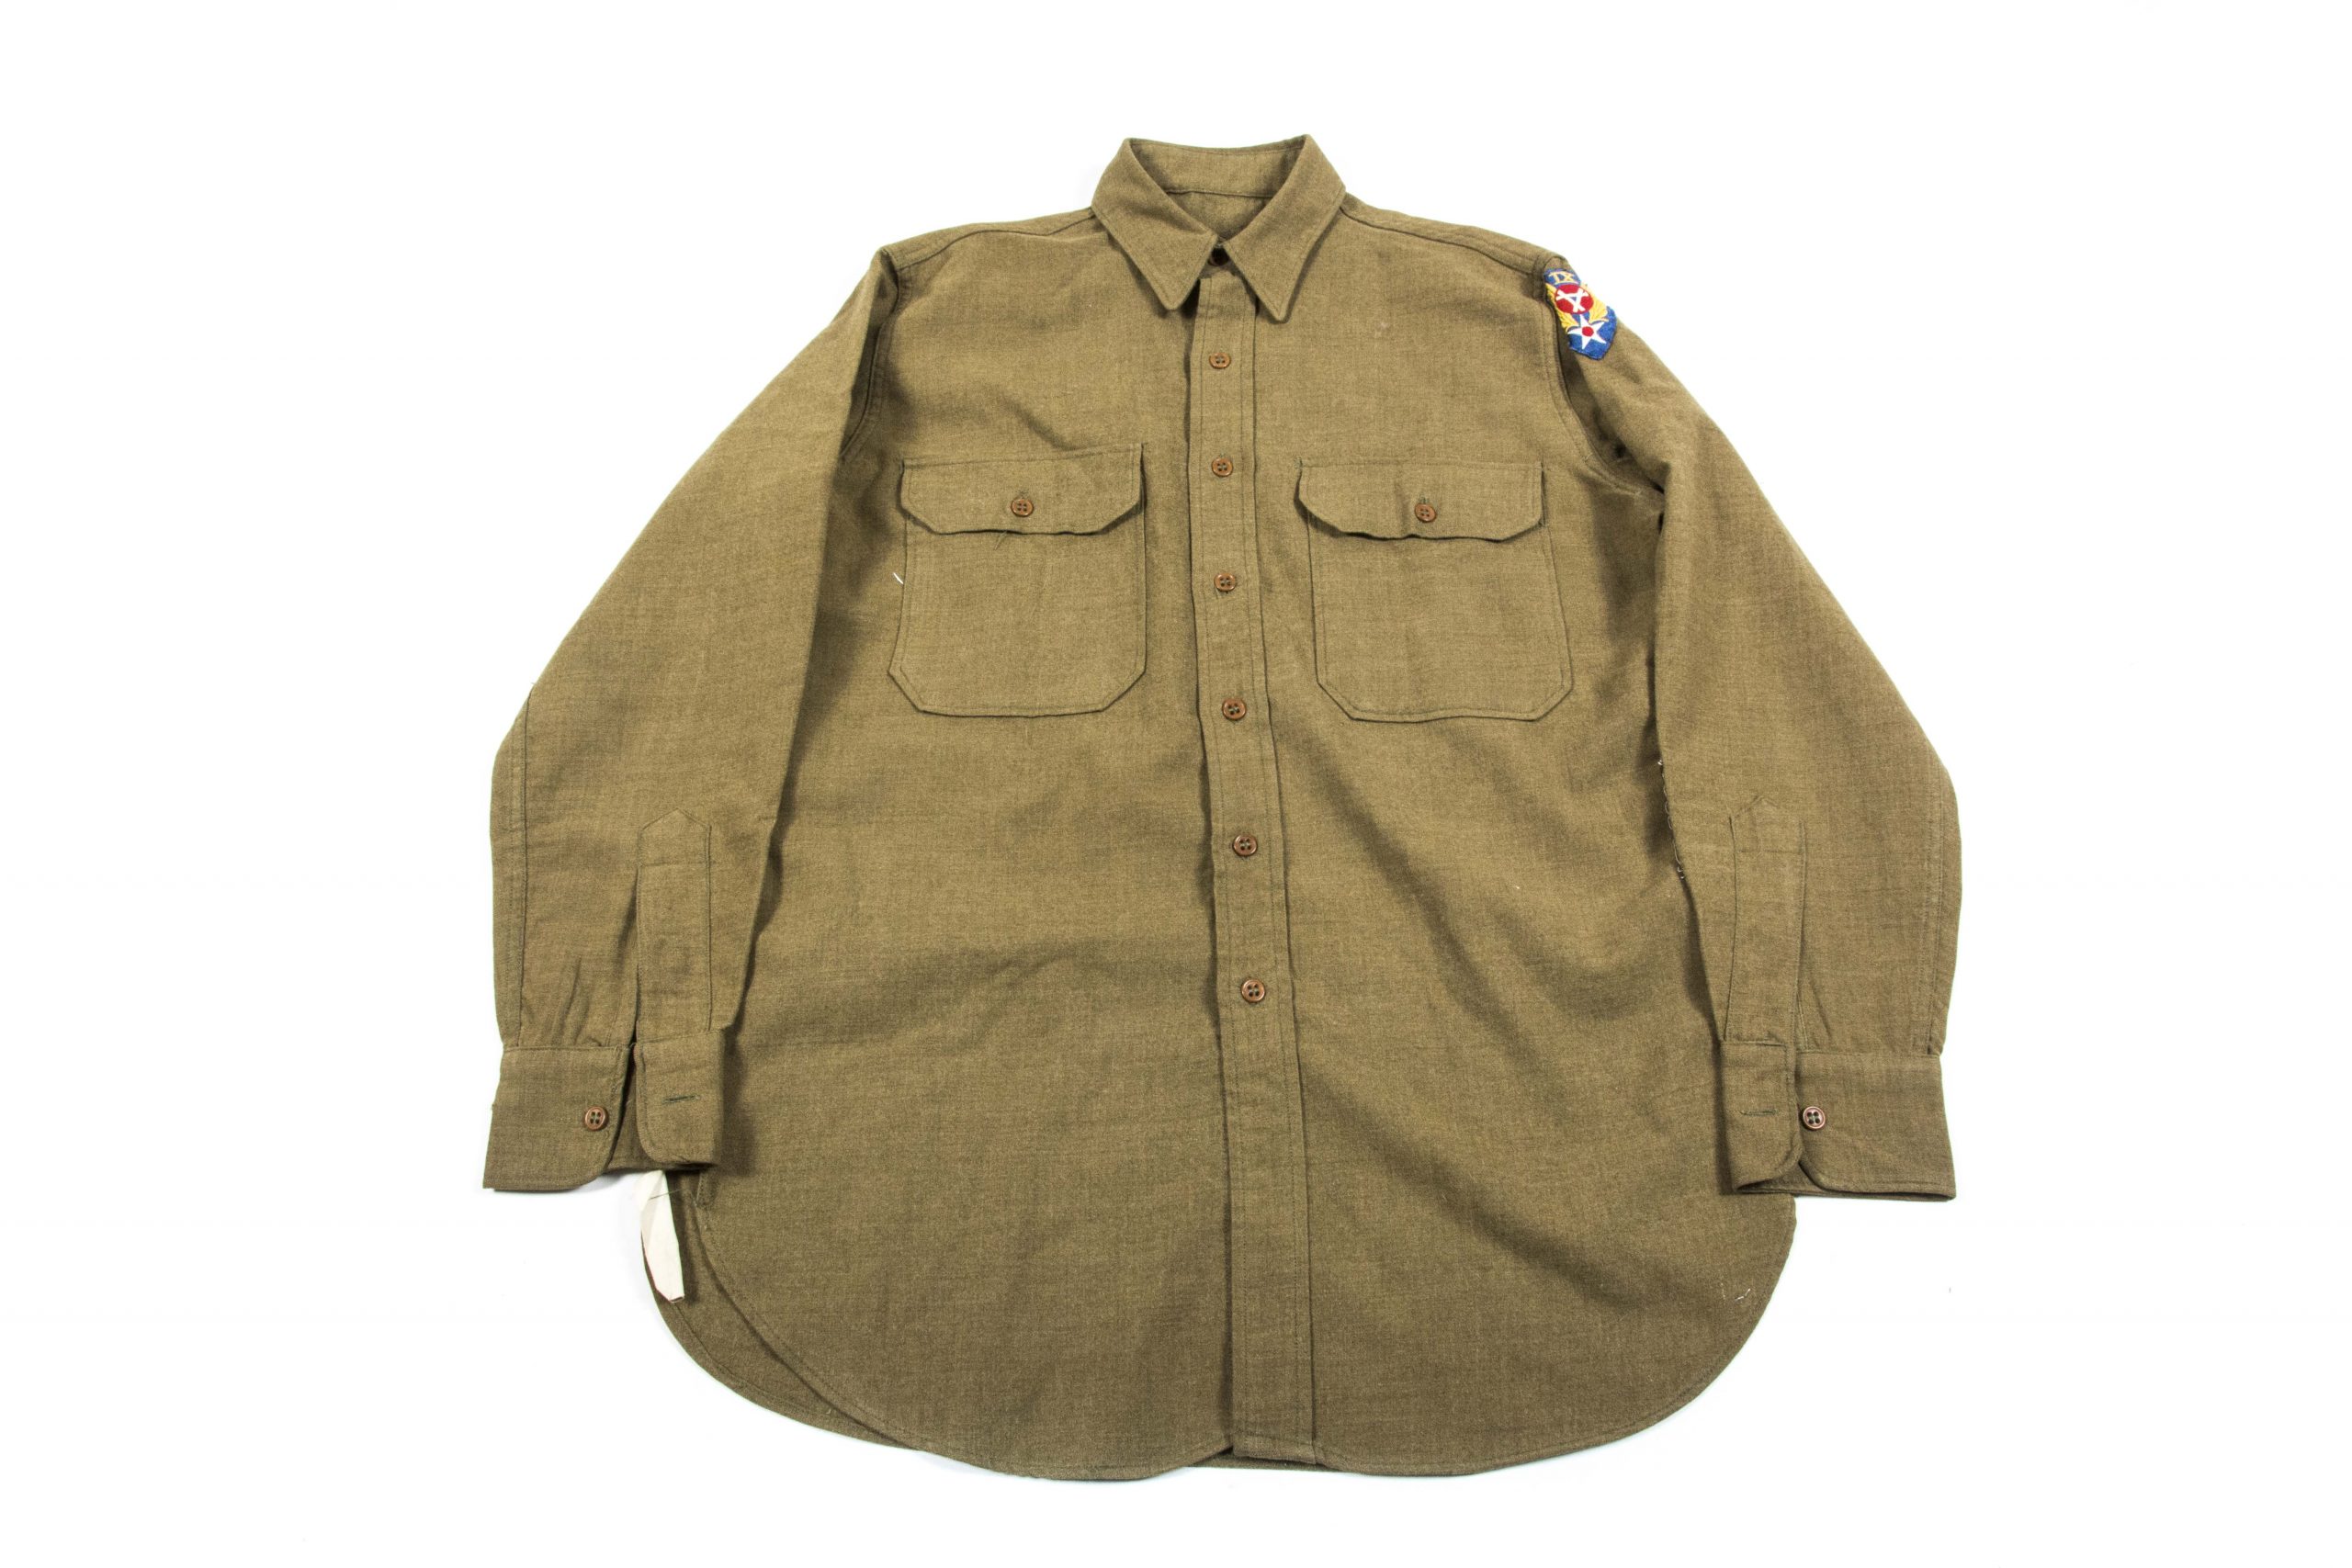 USAAF wool shirt 9th Engineer Command – fjm44